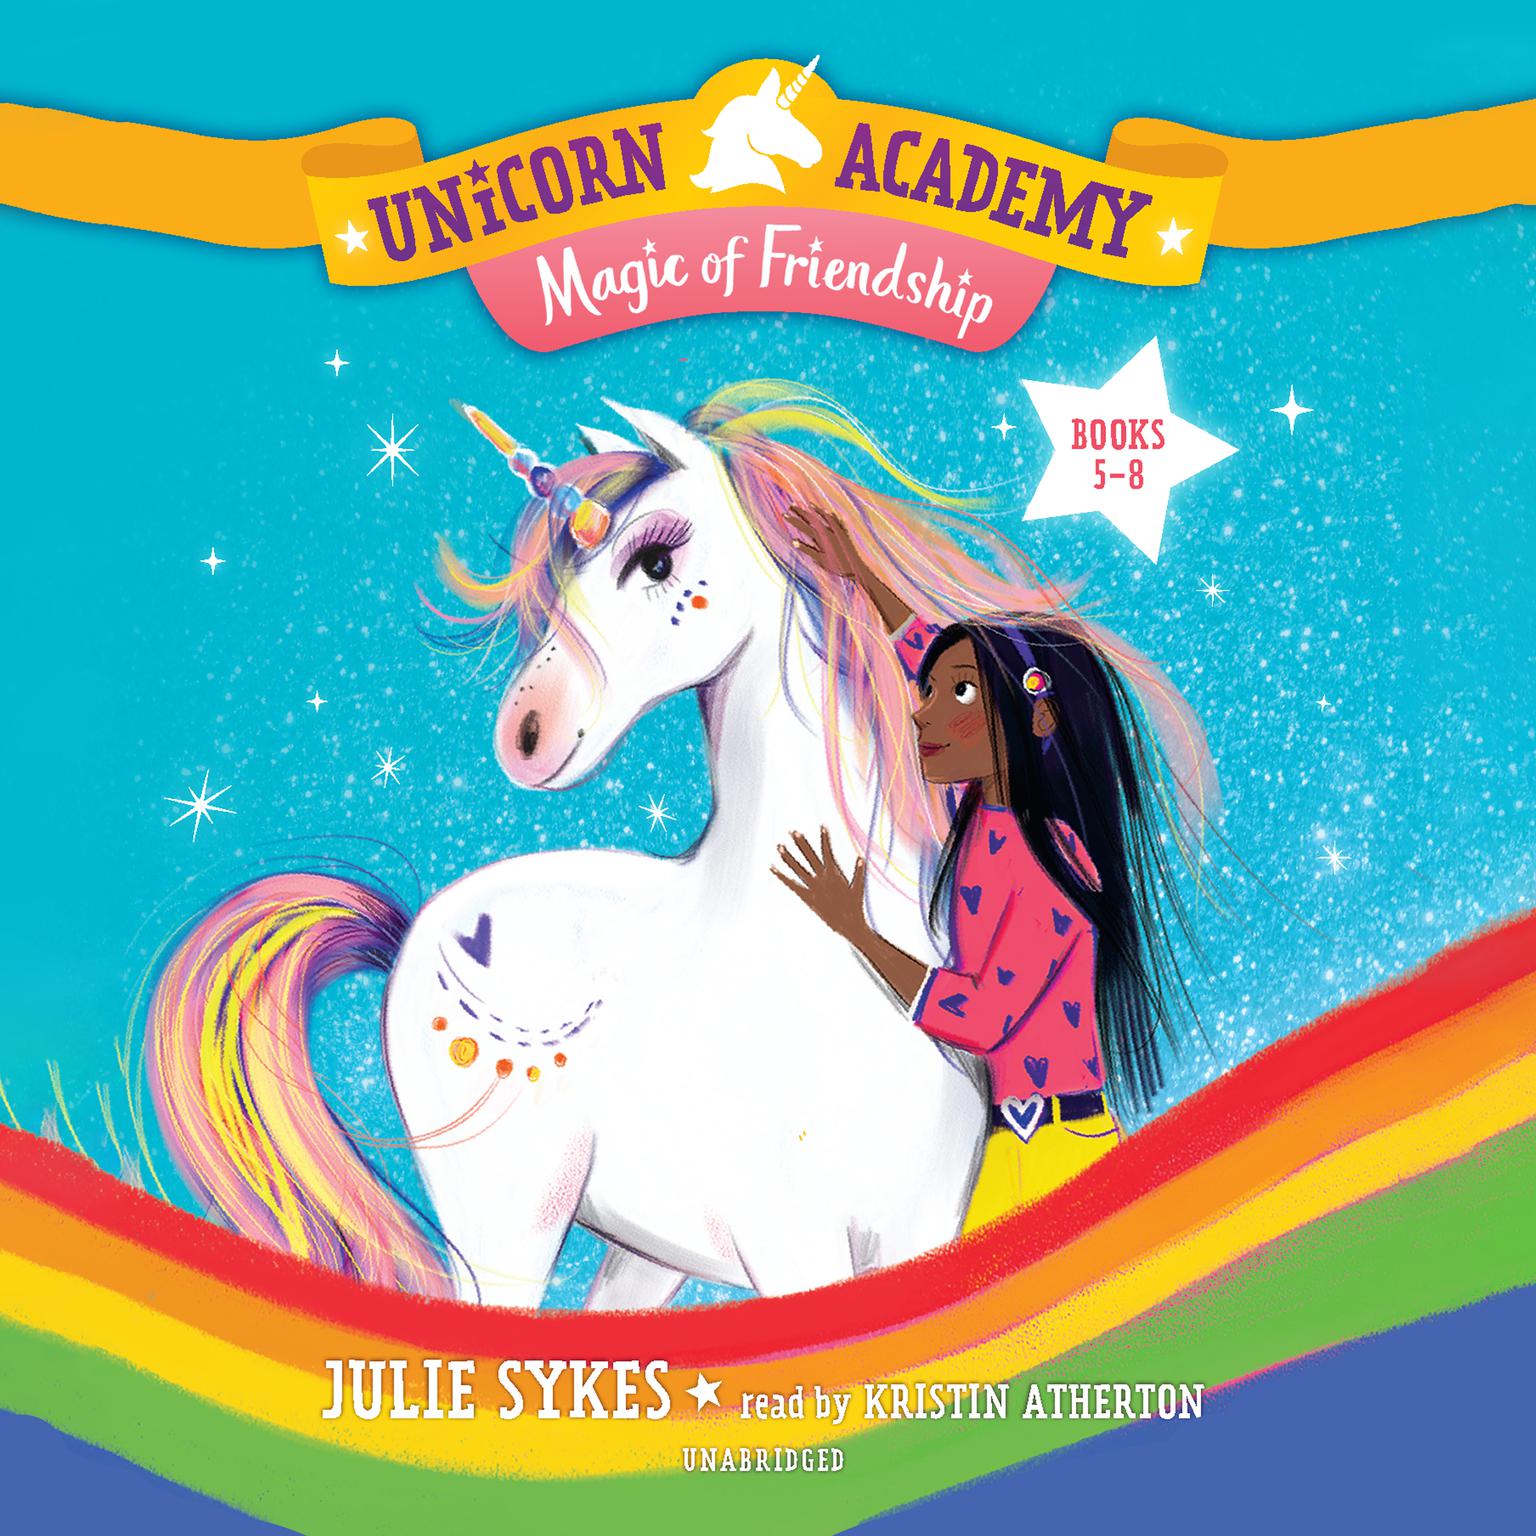 Unicorn Academy: Magic of Friendship Audio Set (Books 5-8) Audiobook, by Julie Sykes